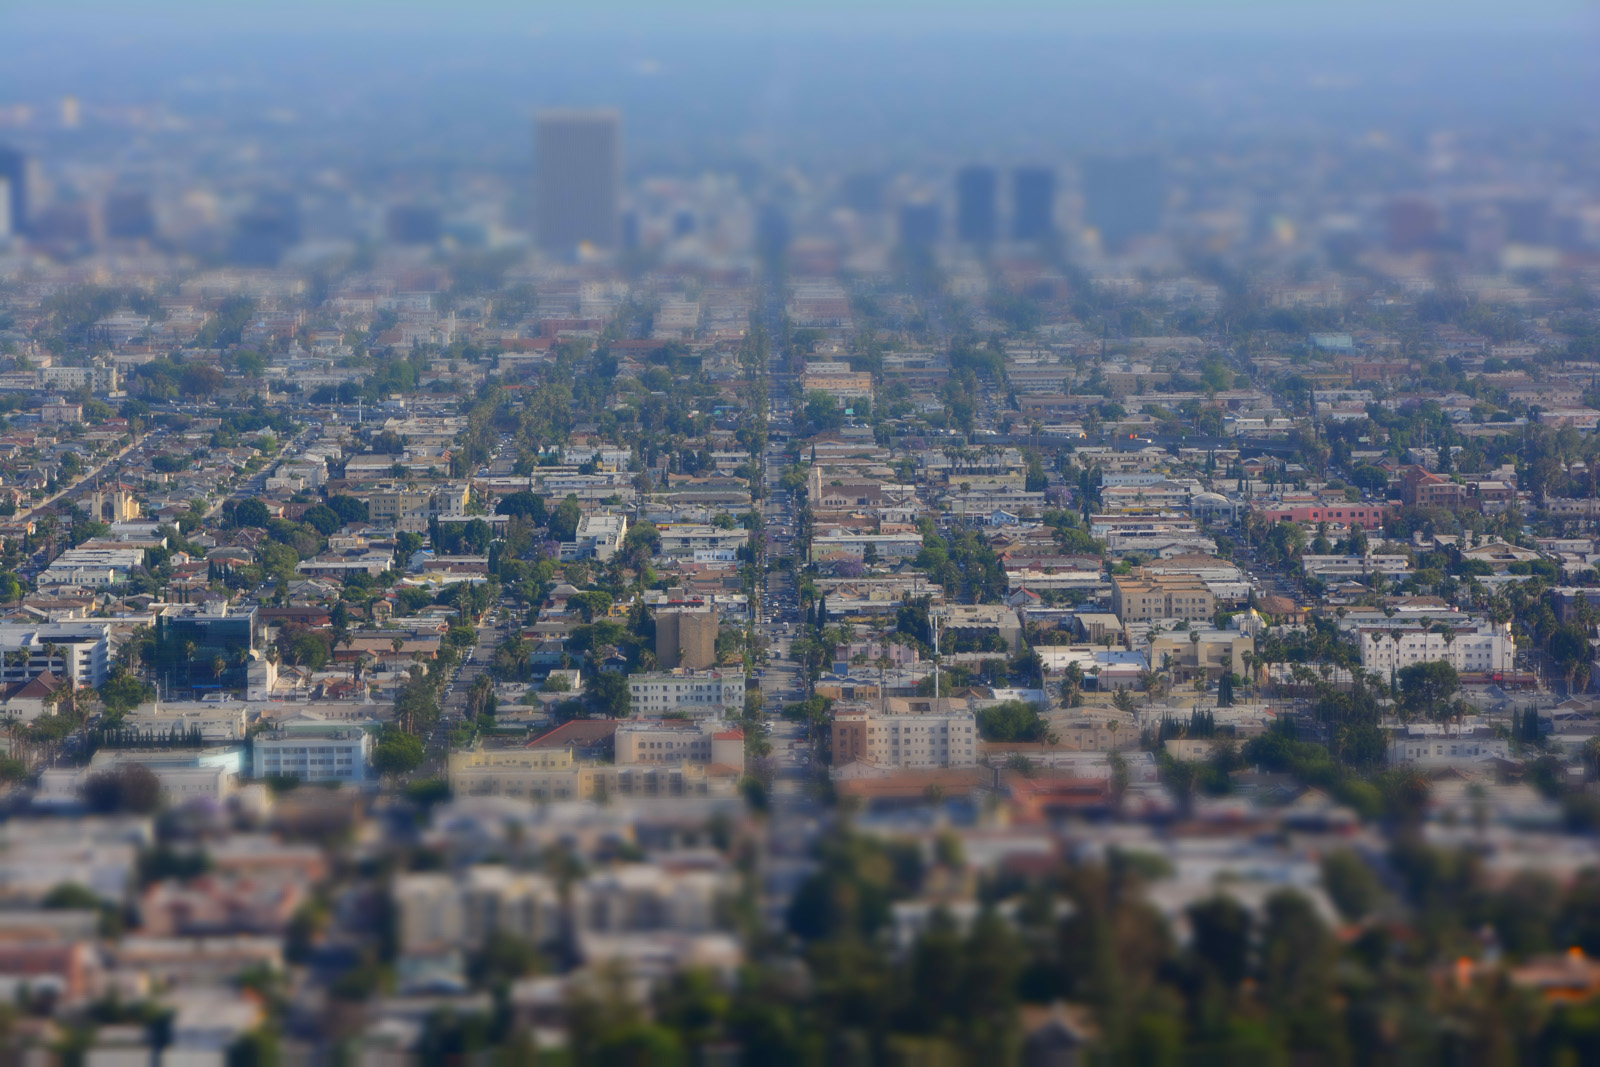 Los Angeles I